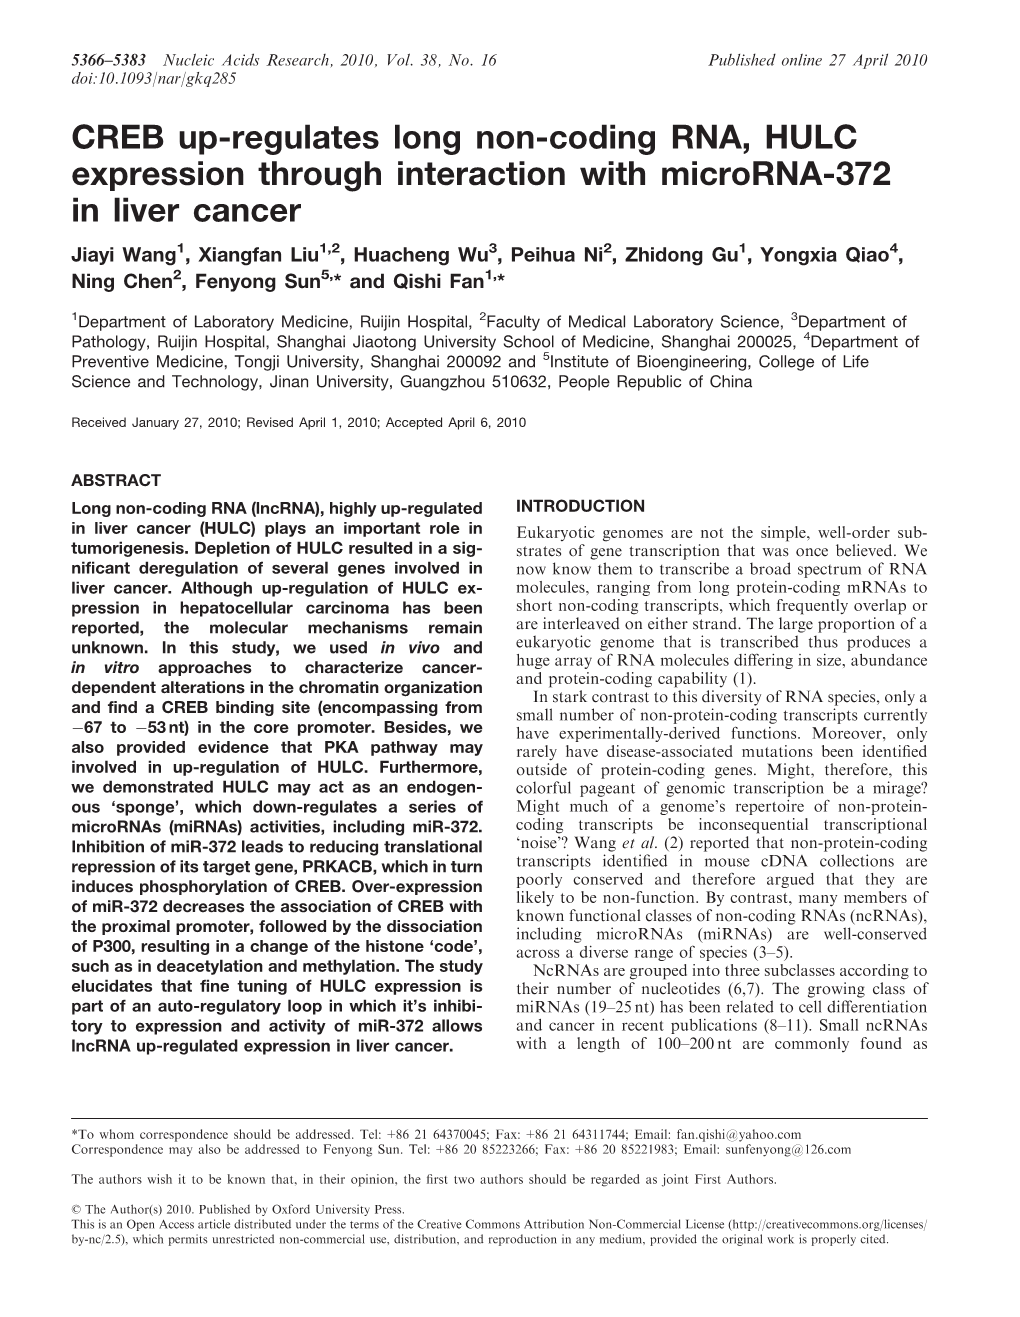 CREB Up-Regulates Long Non-Coding RNA, HULC Expression